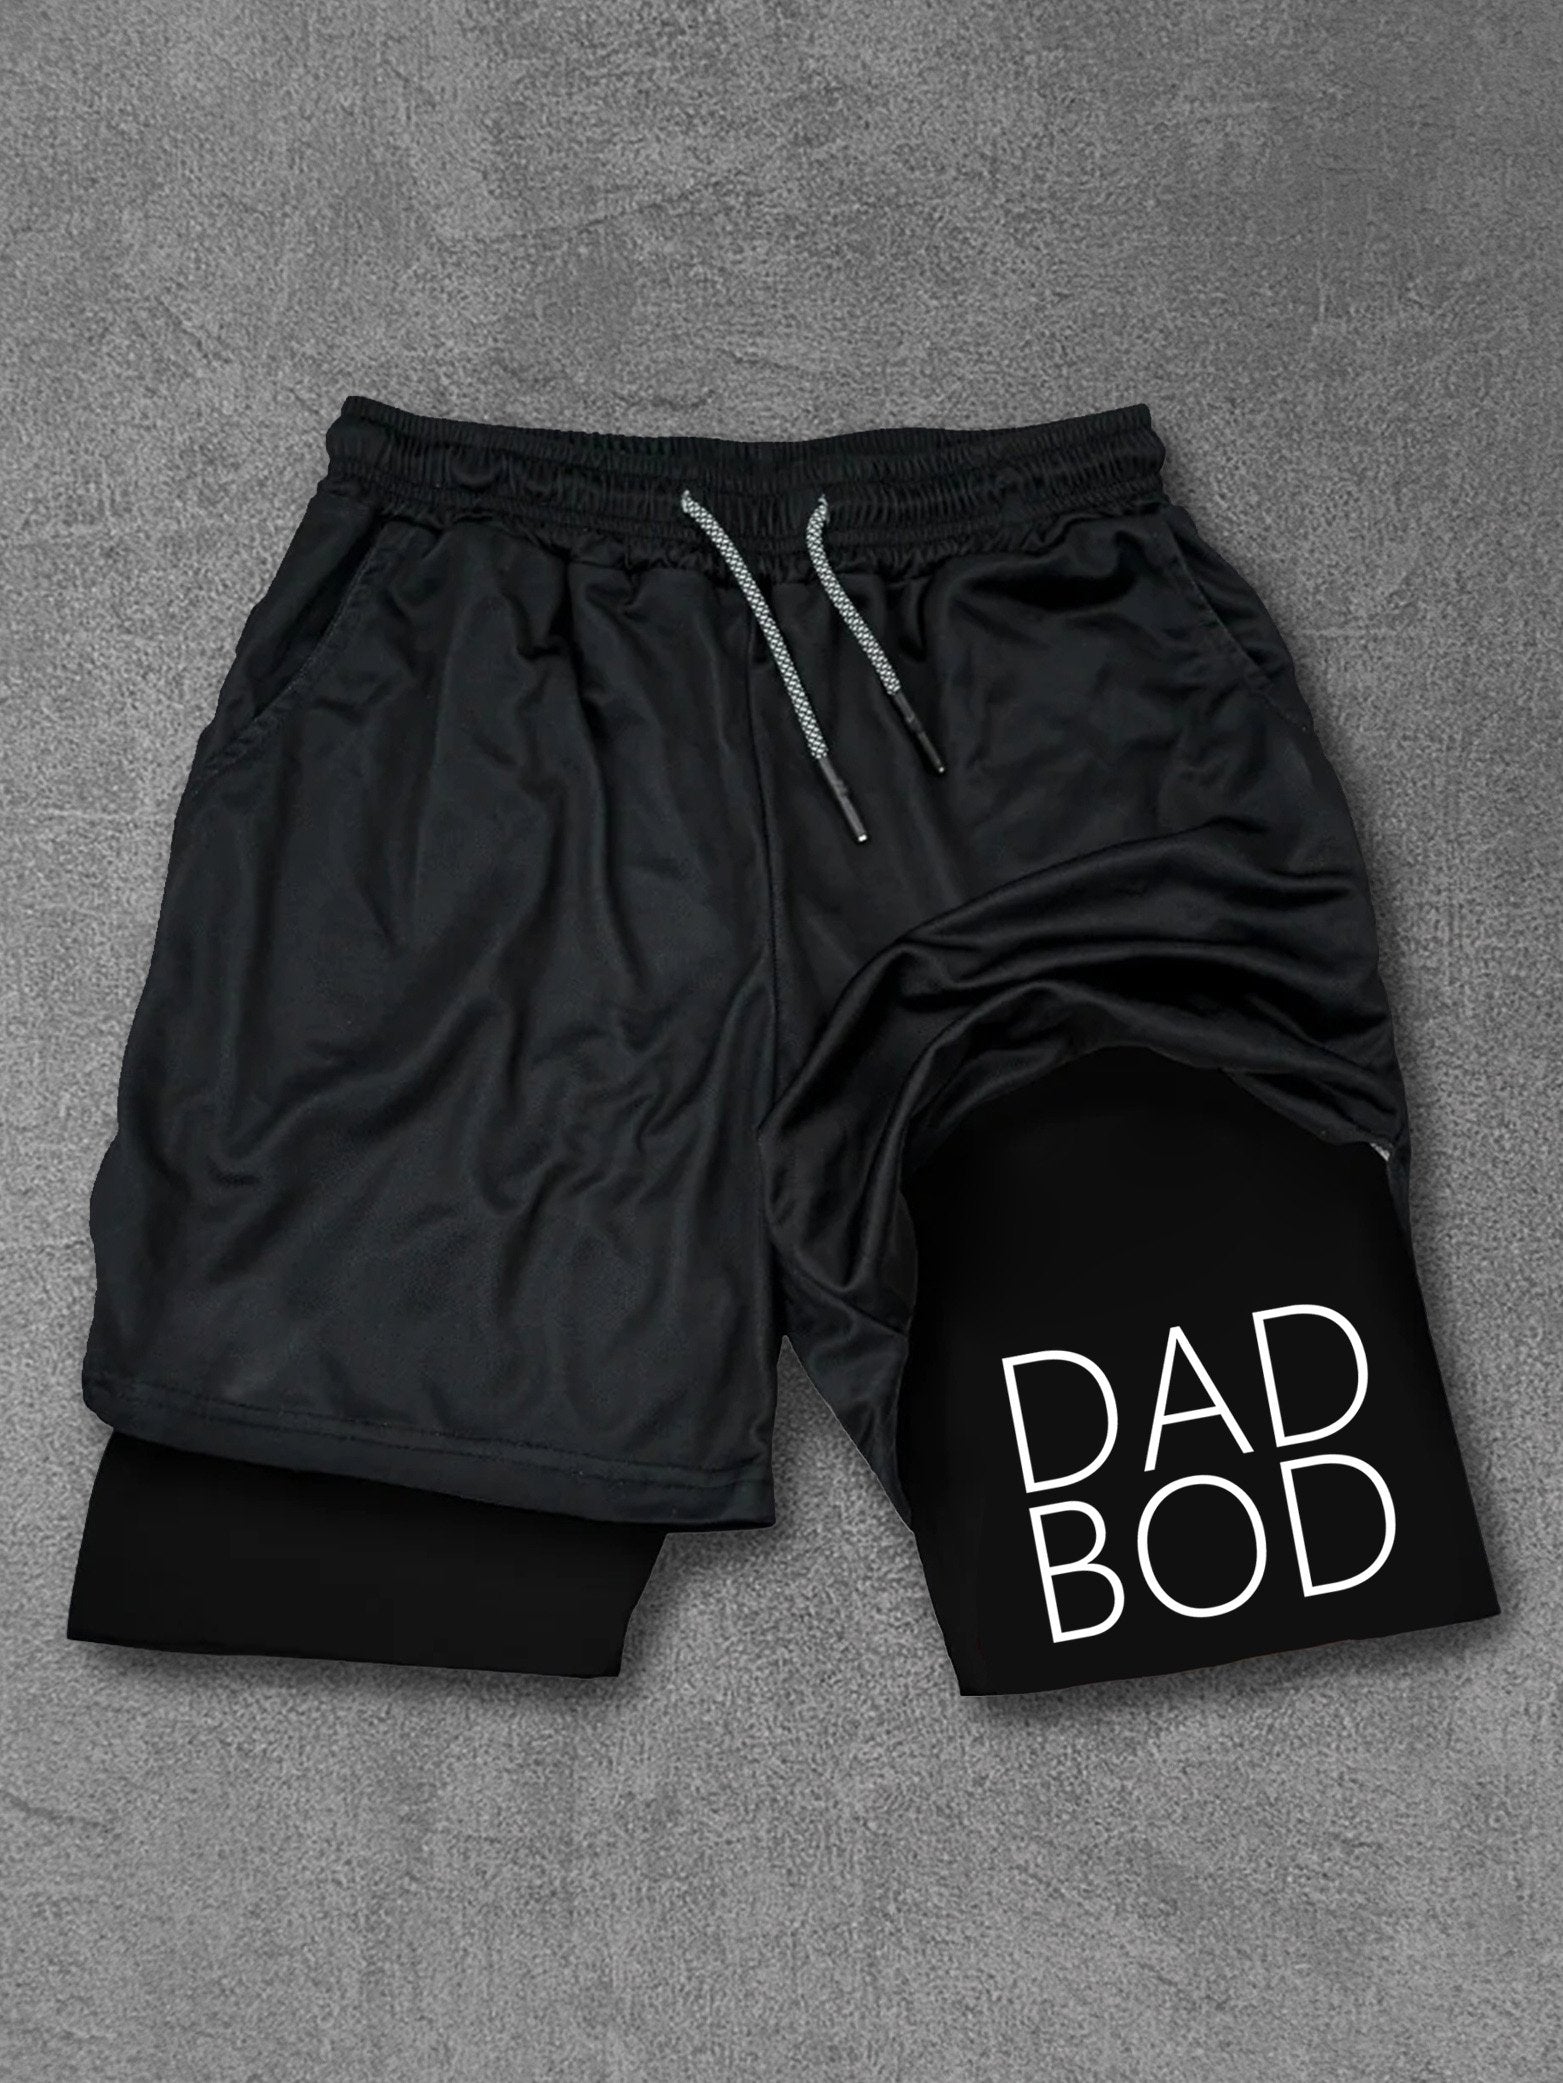 dad bod Performance Training Shorts